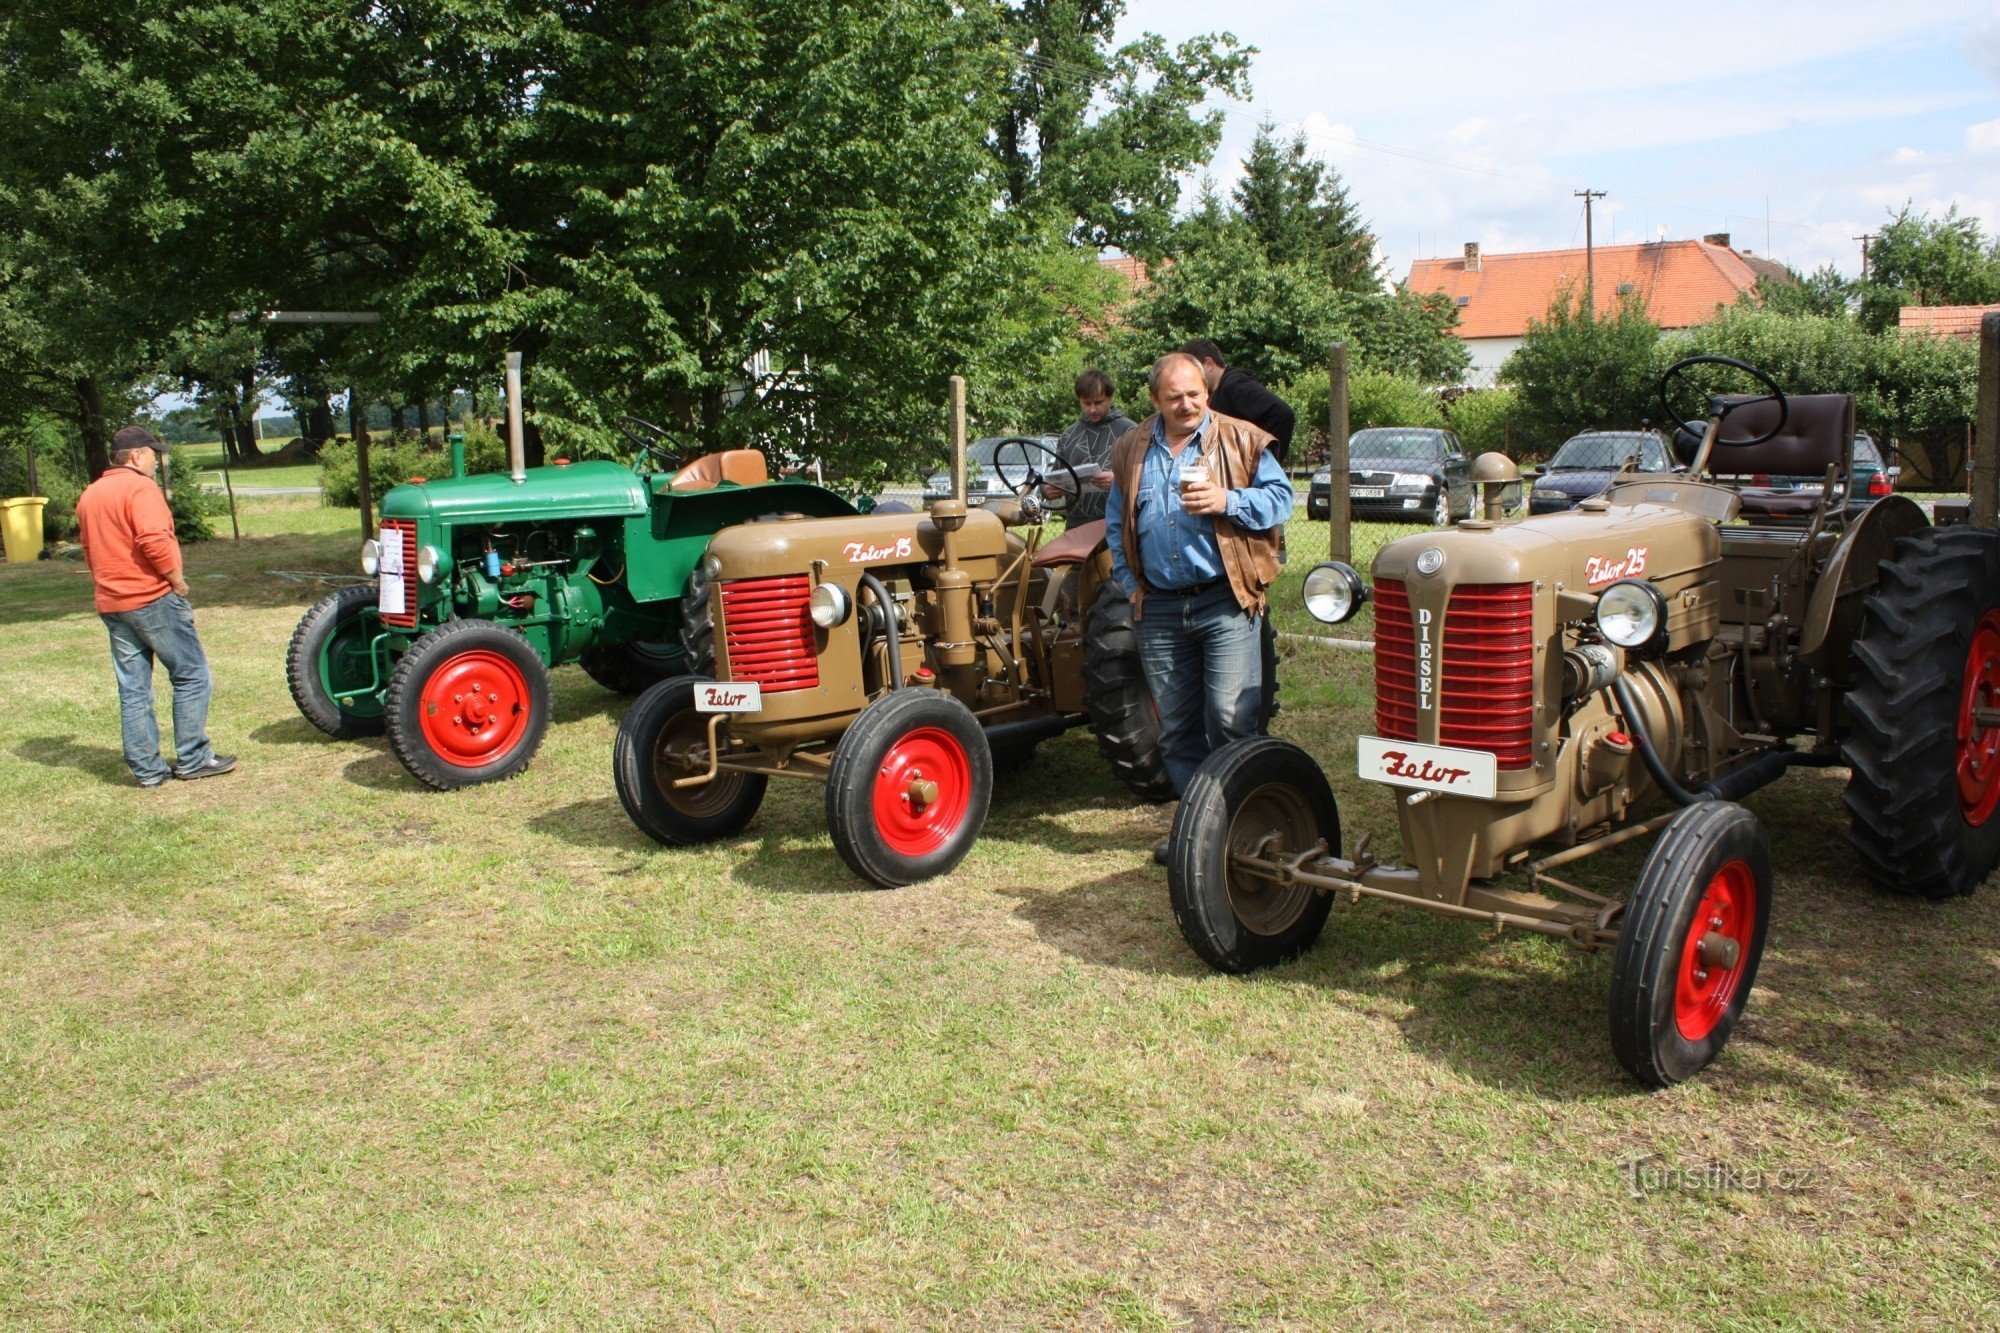 Traktorji g. Václava Brožka na srečanju Němčice v vasi Němčice pri Netolicu